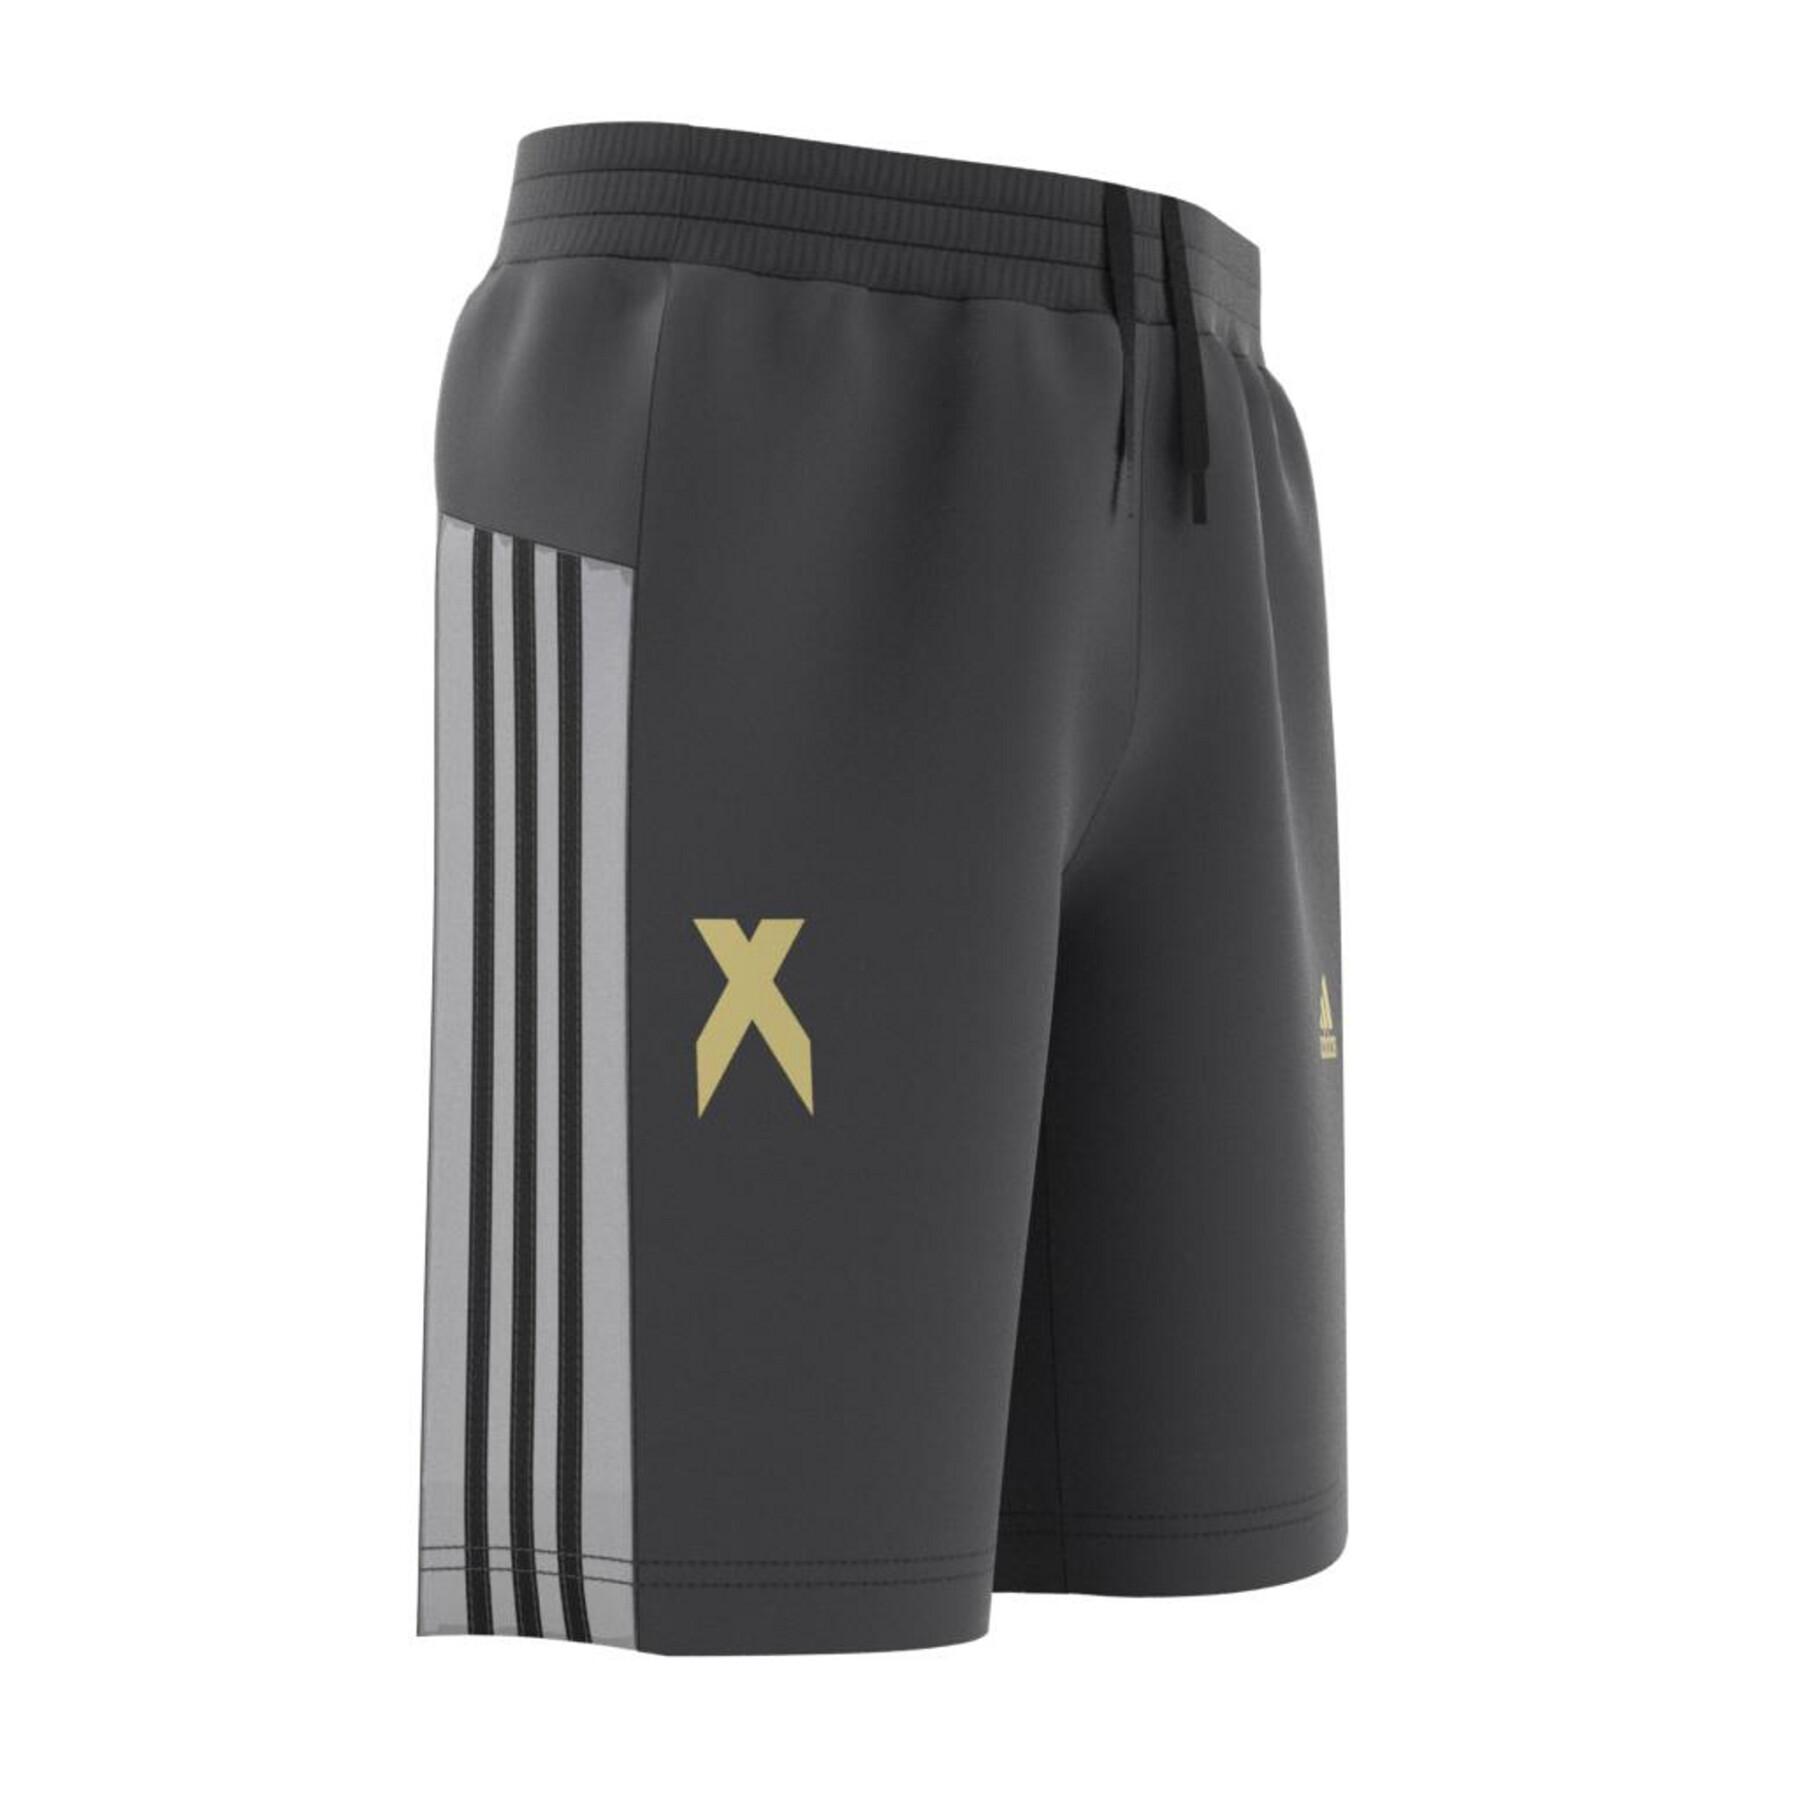 Shorts för barn adidas Football-Inspired X Aeroeady